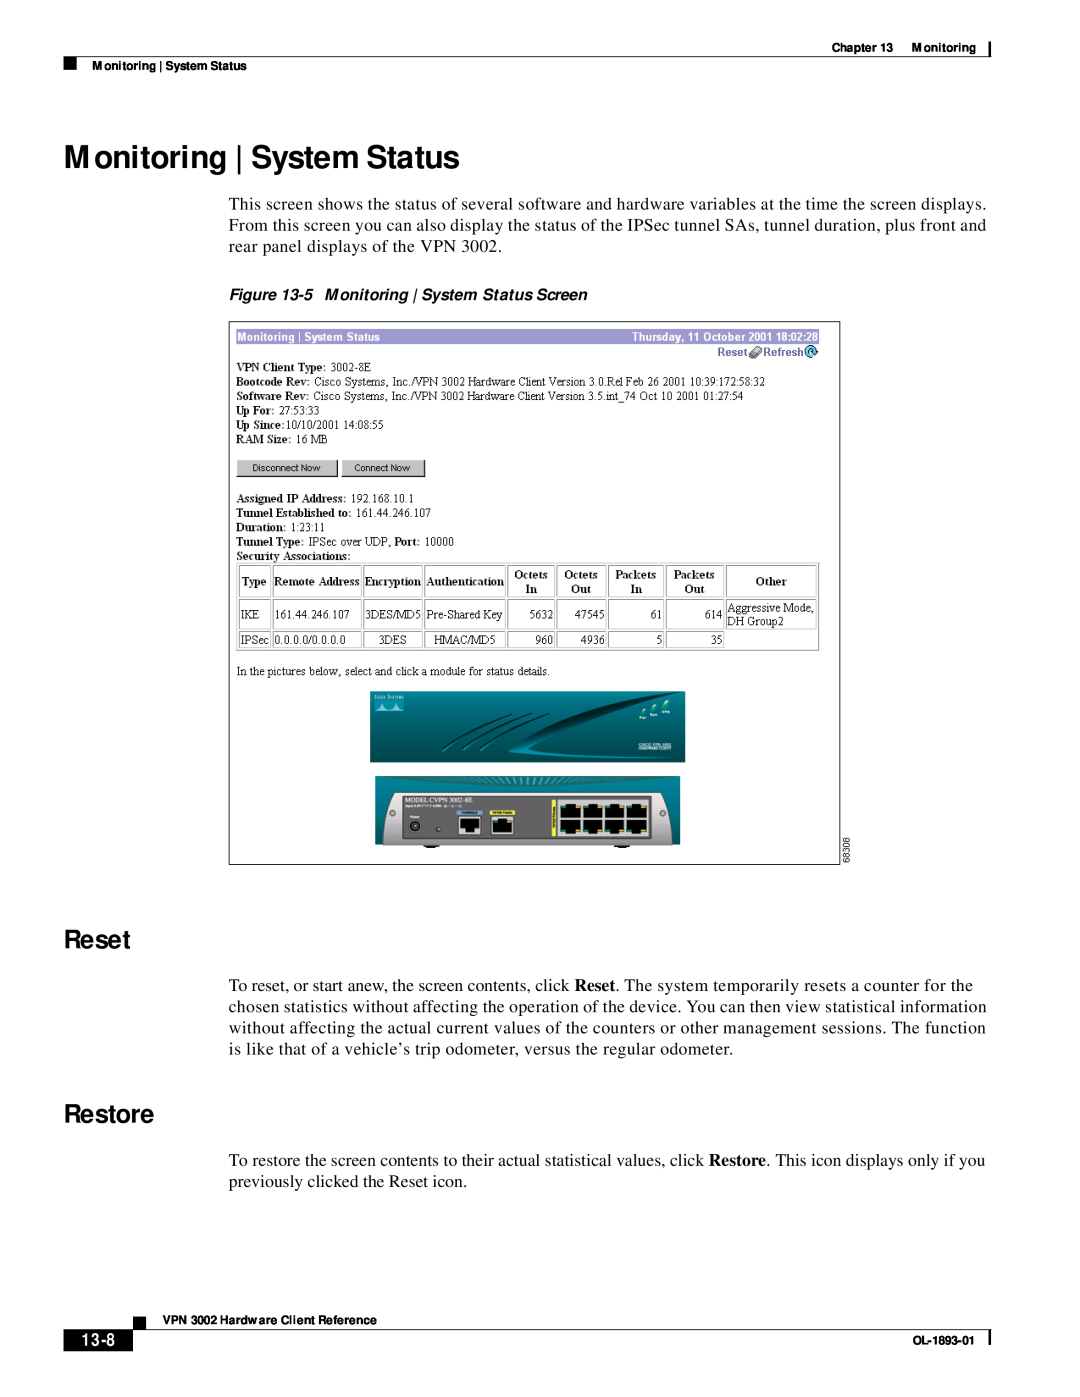 Cisco Systems VPN 3002 manual Monitoring | System Status, Reset, Restore, 13-8 